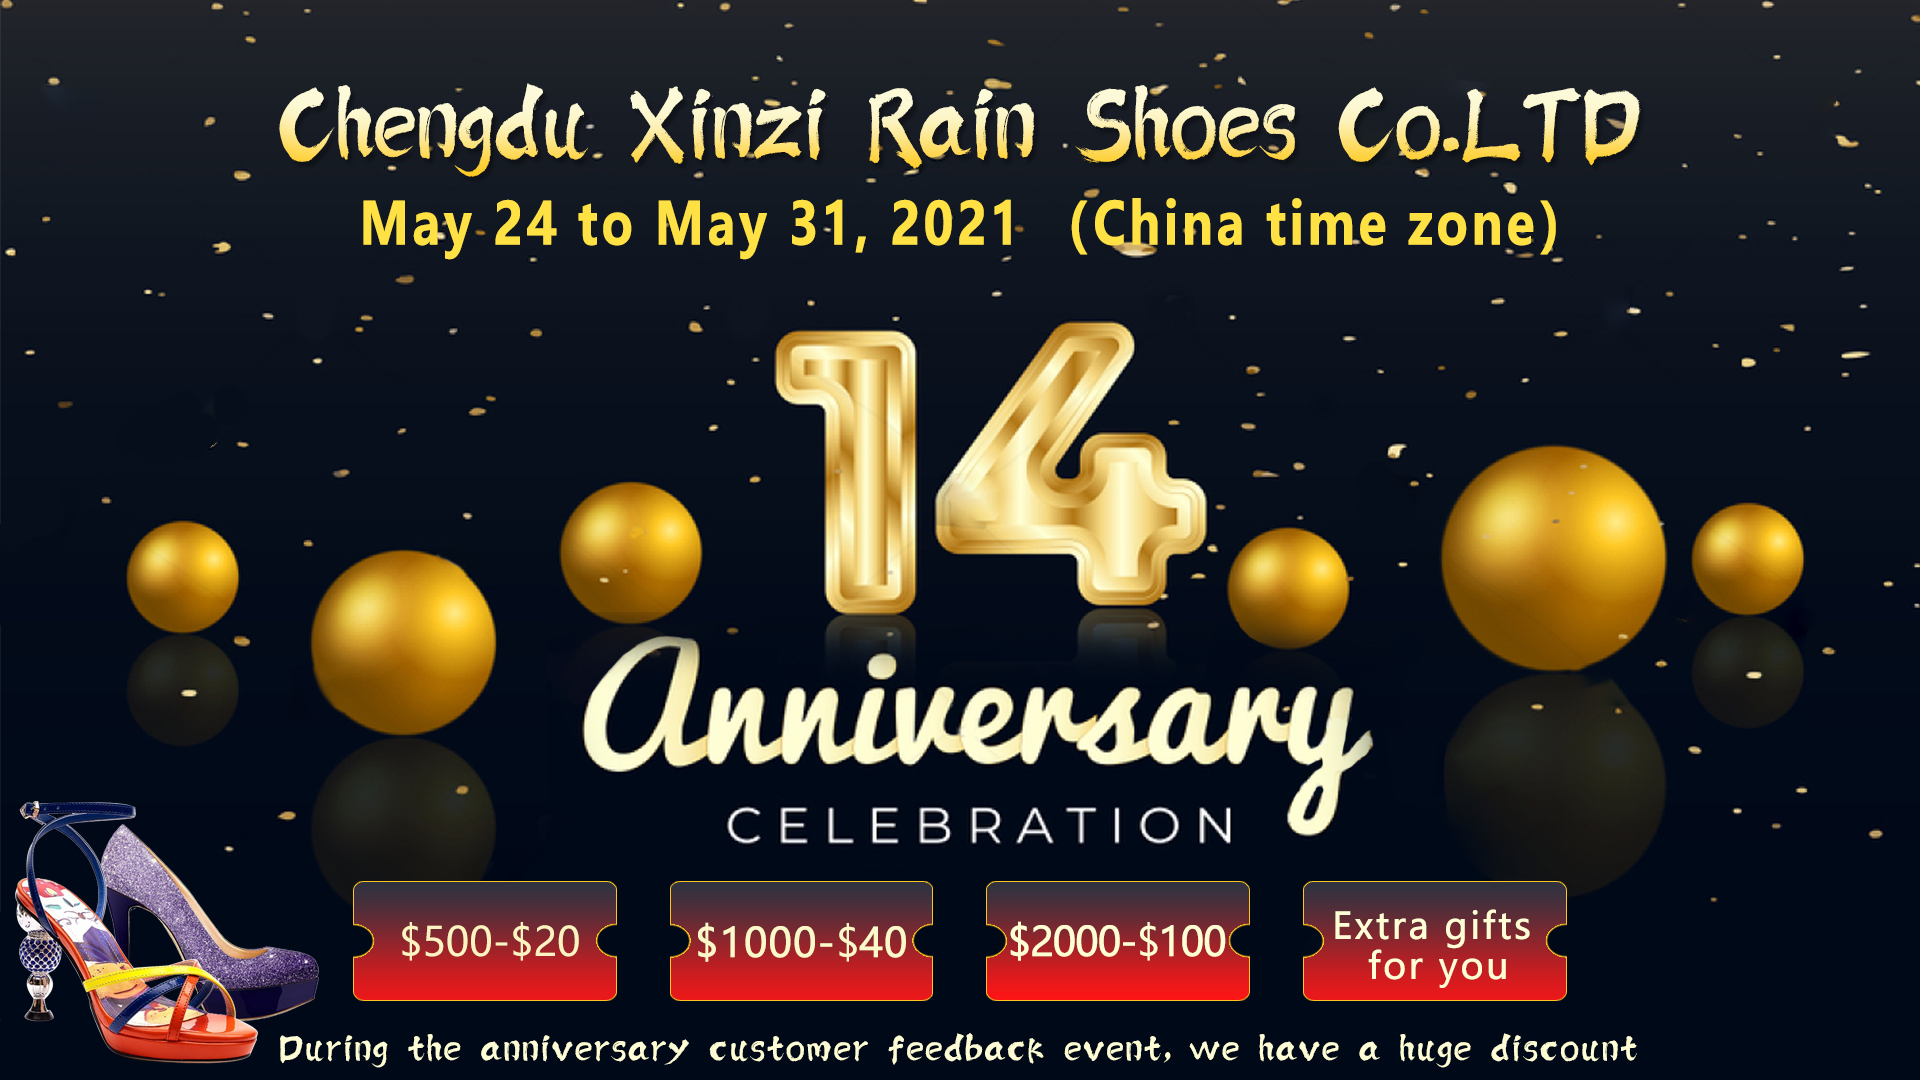 Xinzi Rain Shoes Co., Ltd., 14 წლის იუბილე